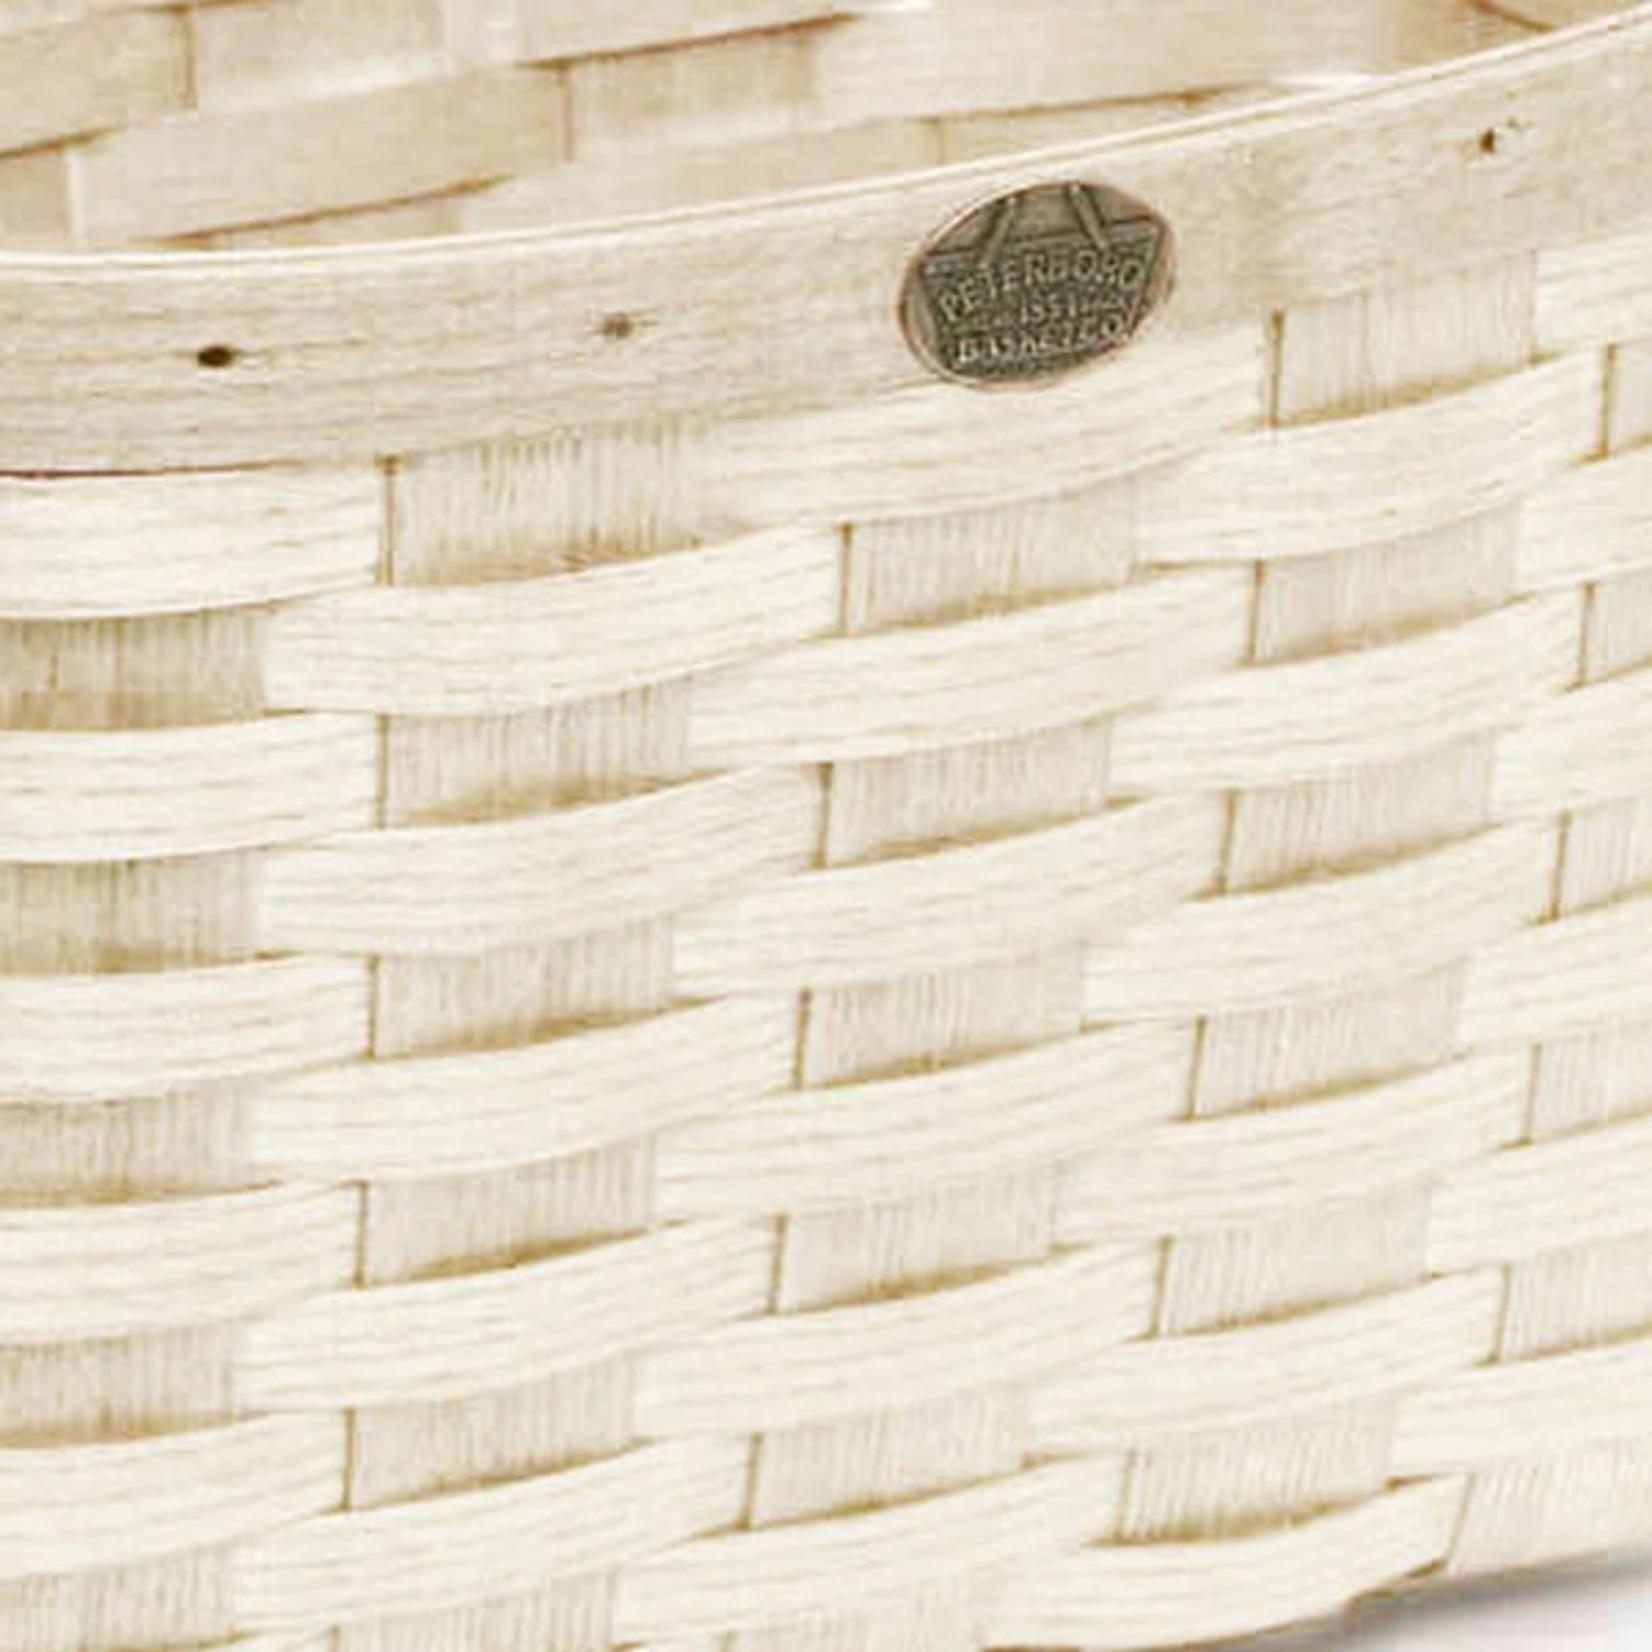 Peterboro Peterboro Handmade Basket Pannier